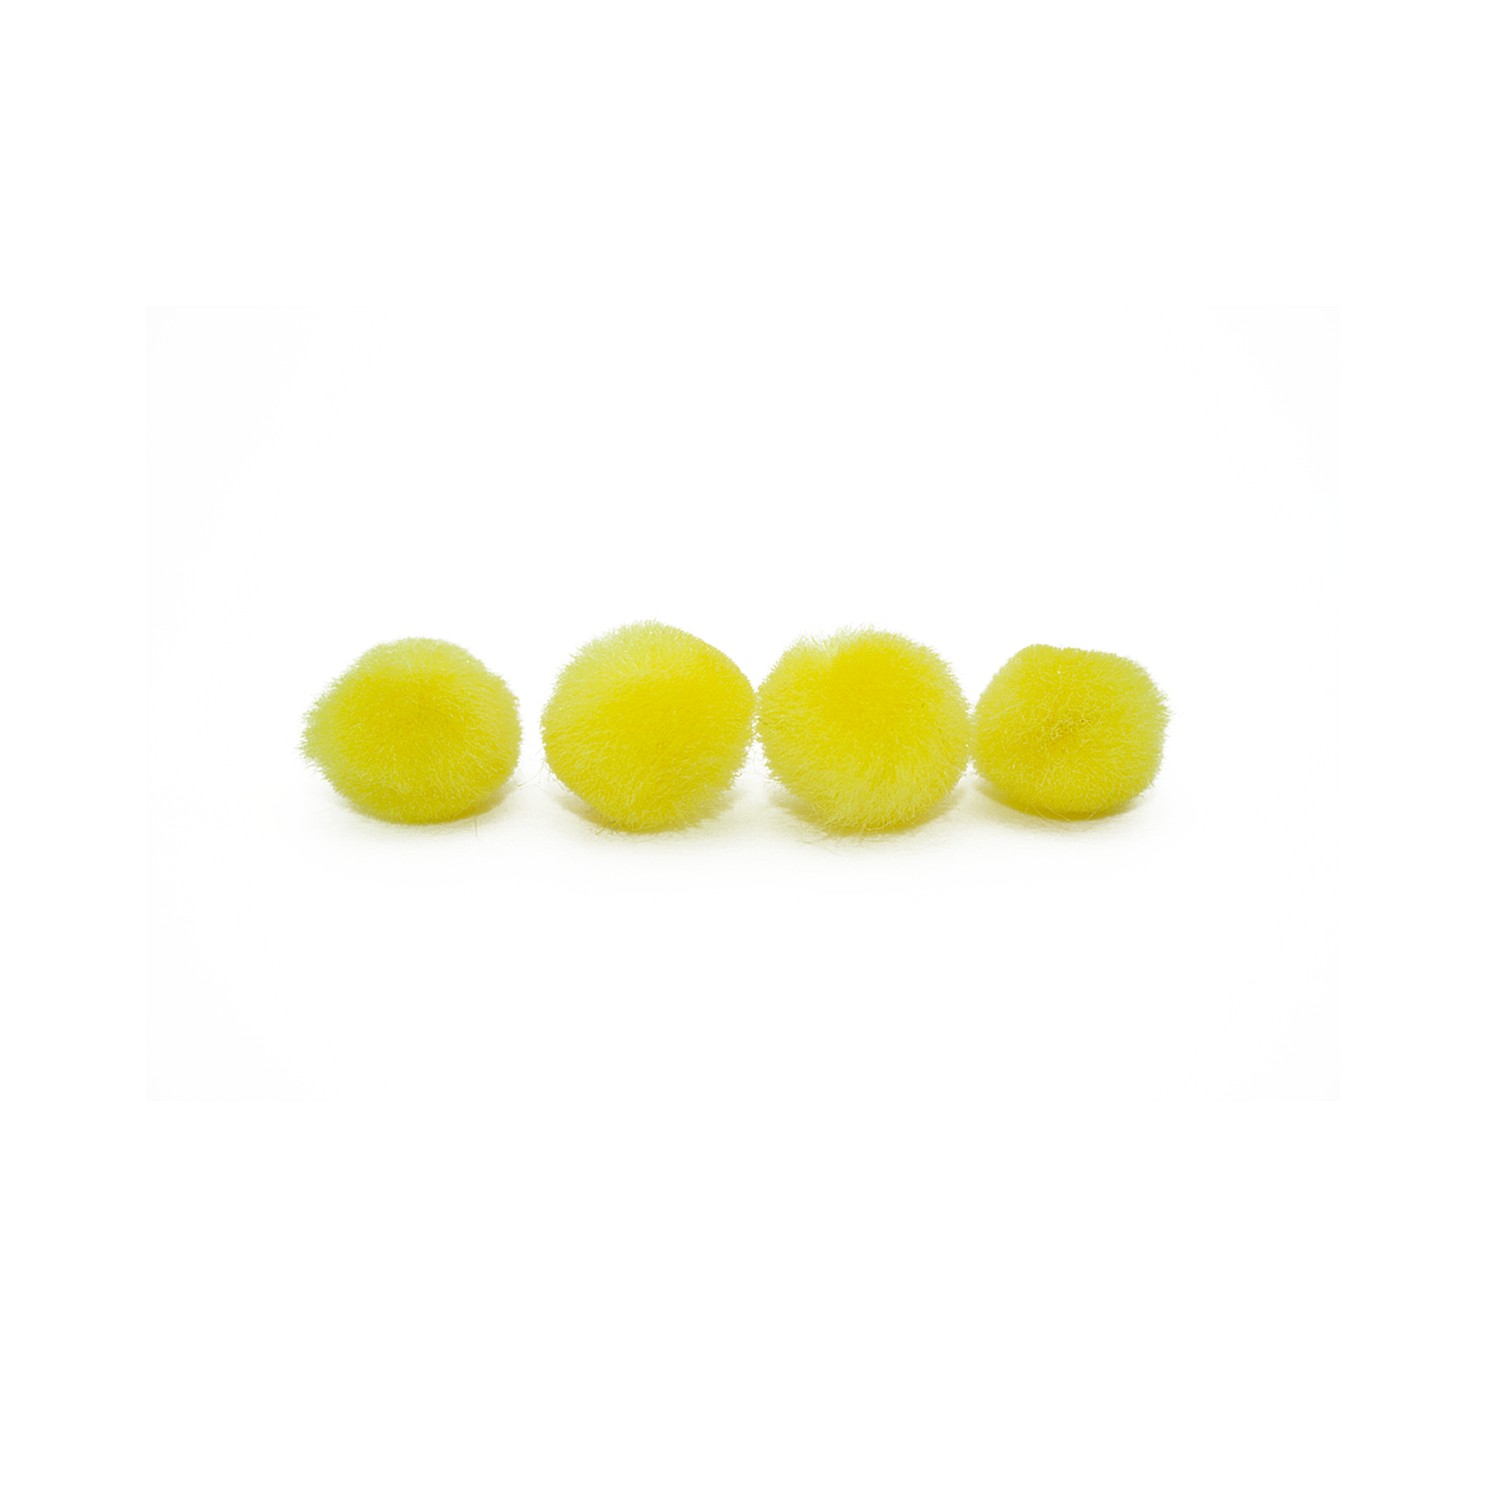 0.75 inch Yellow Mini Craft Pom Poms 100 Pieces